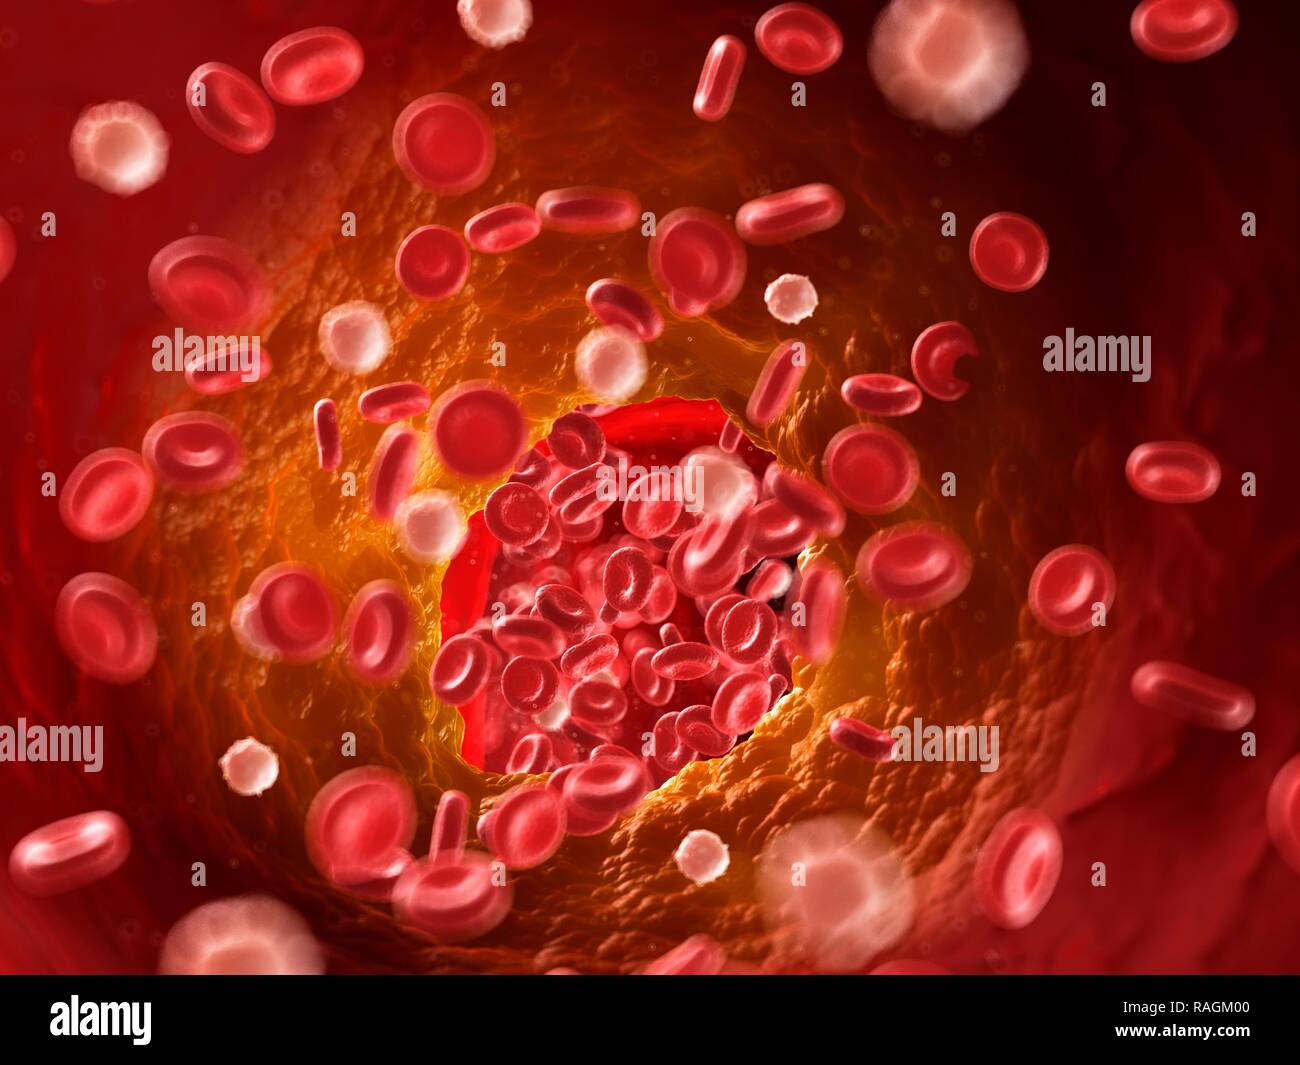 Illustration of a blocked artery. Stock Photo